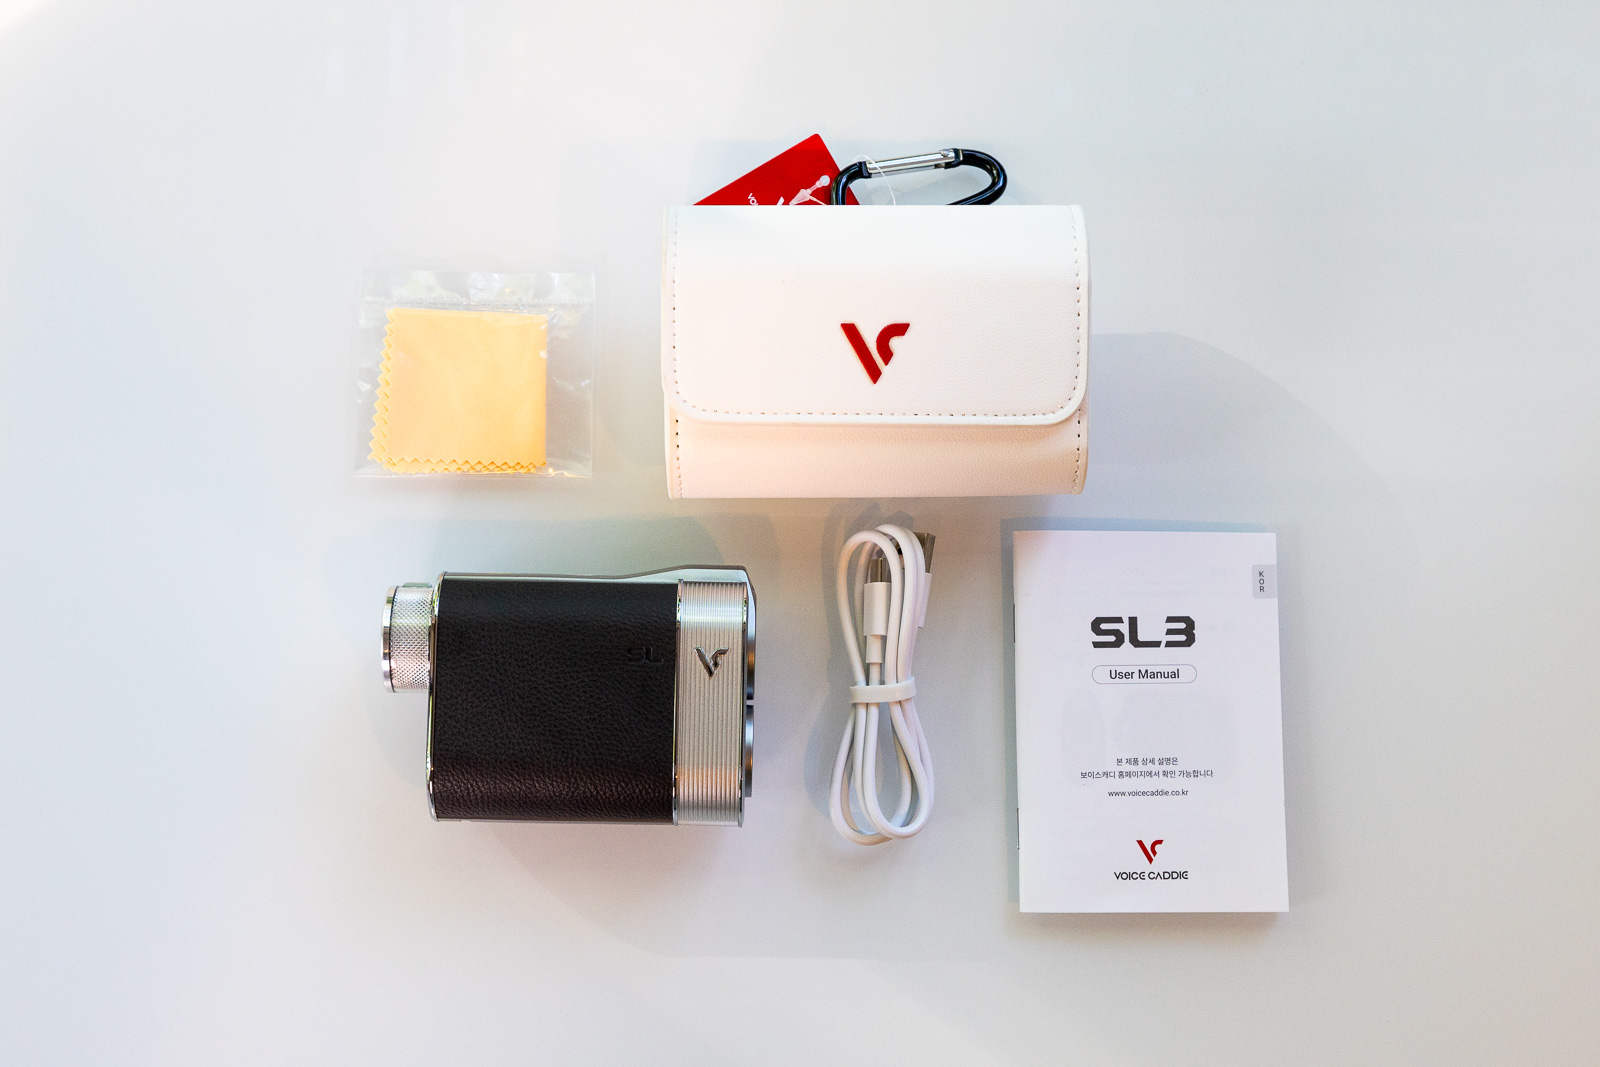 Voice Caddie SL3 - What's in the Box